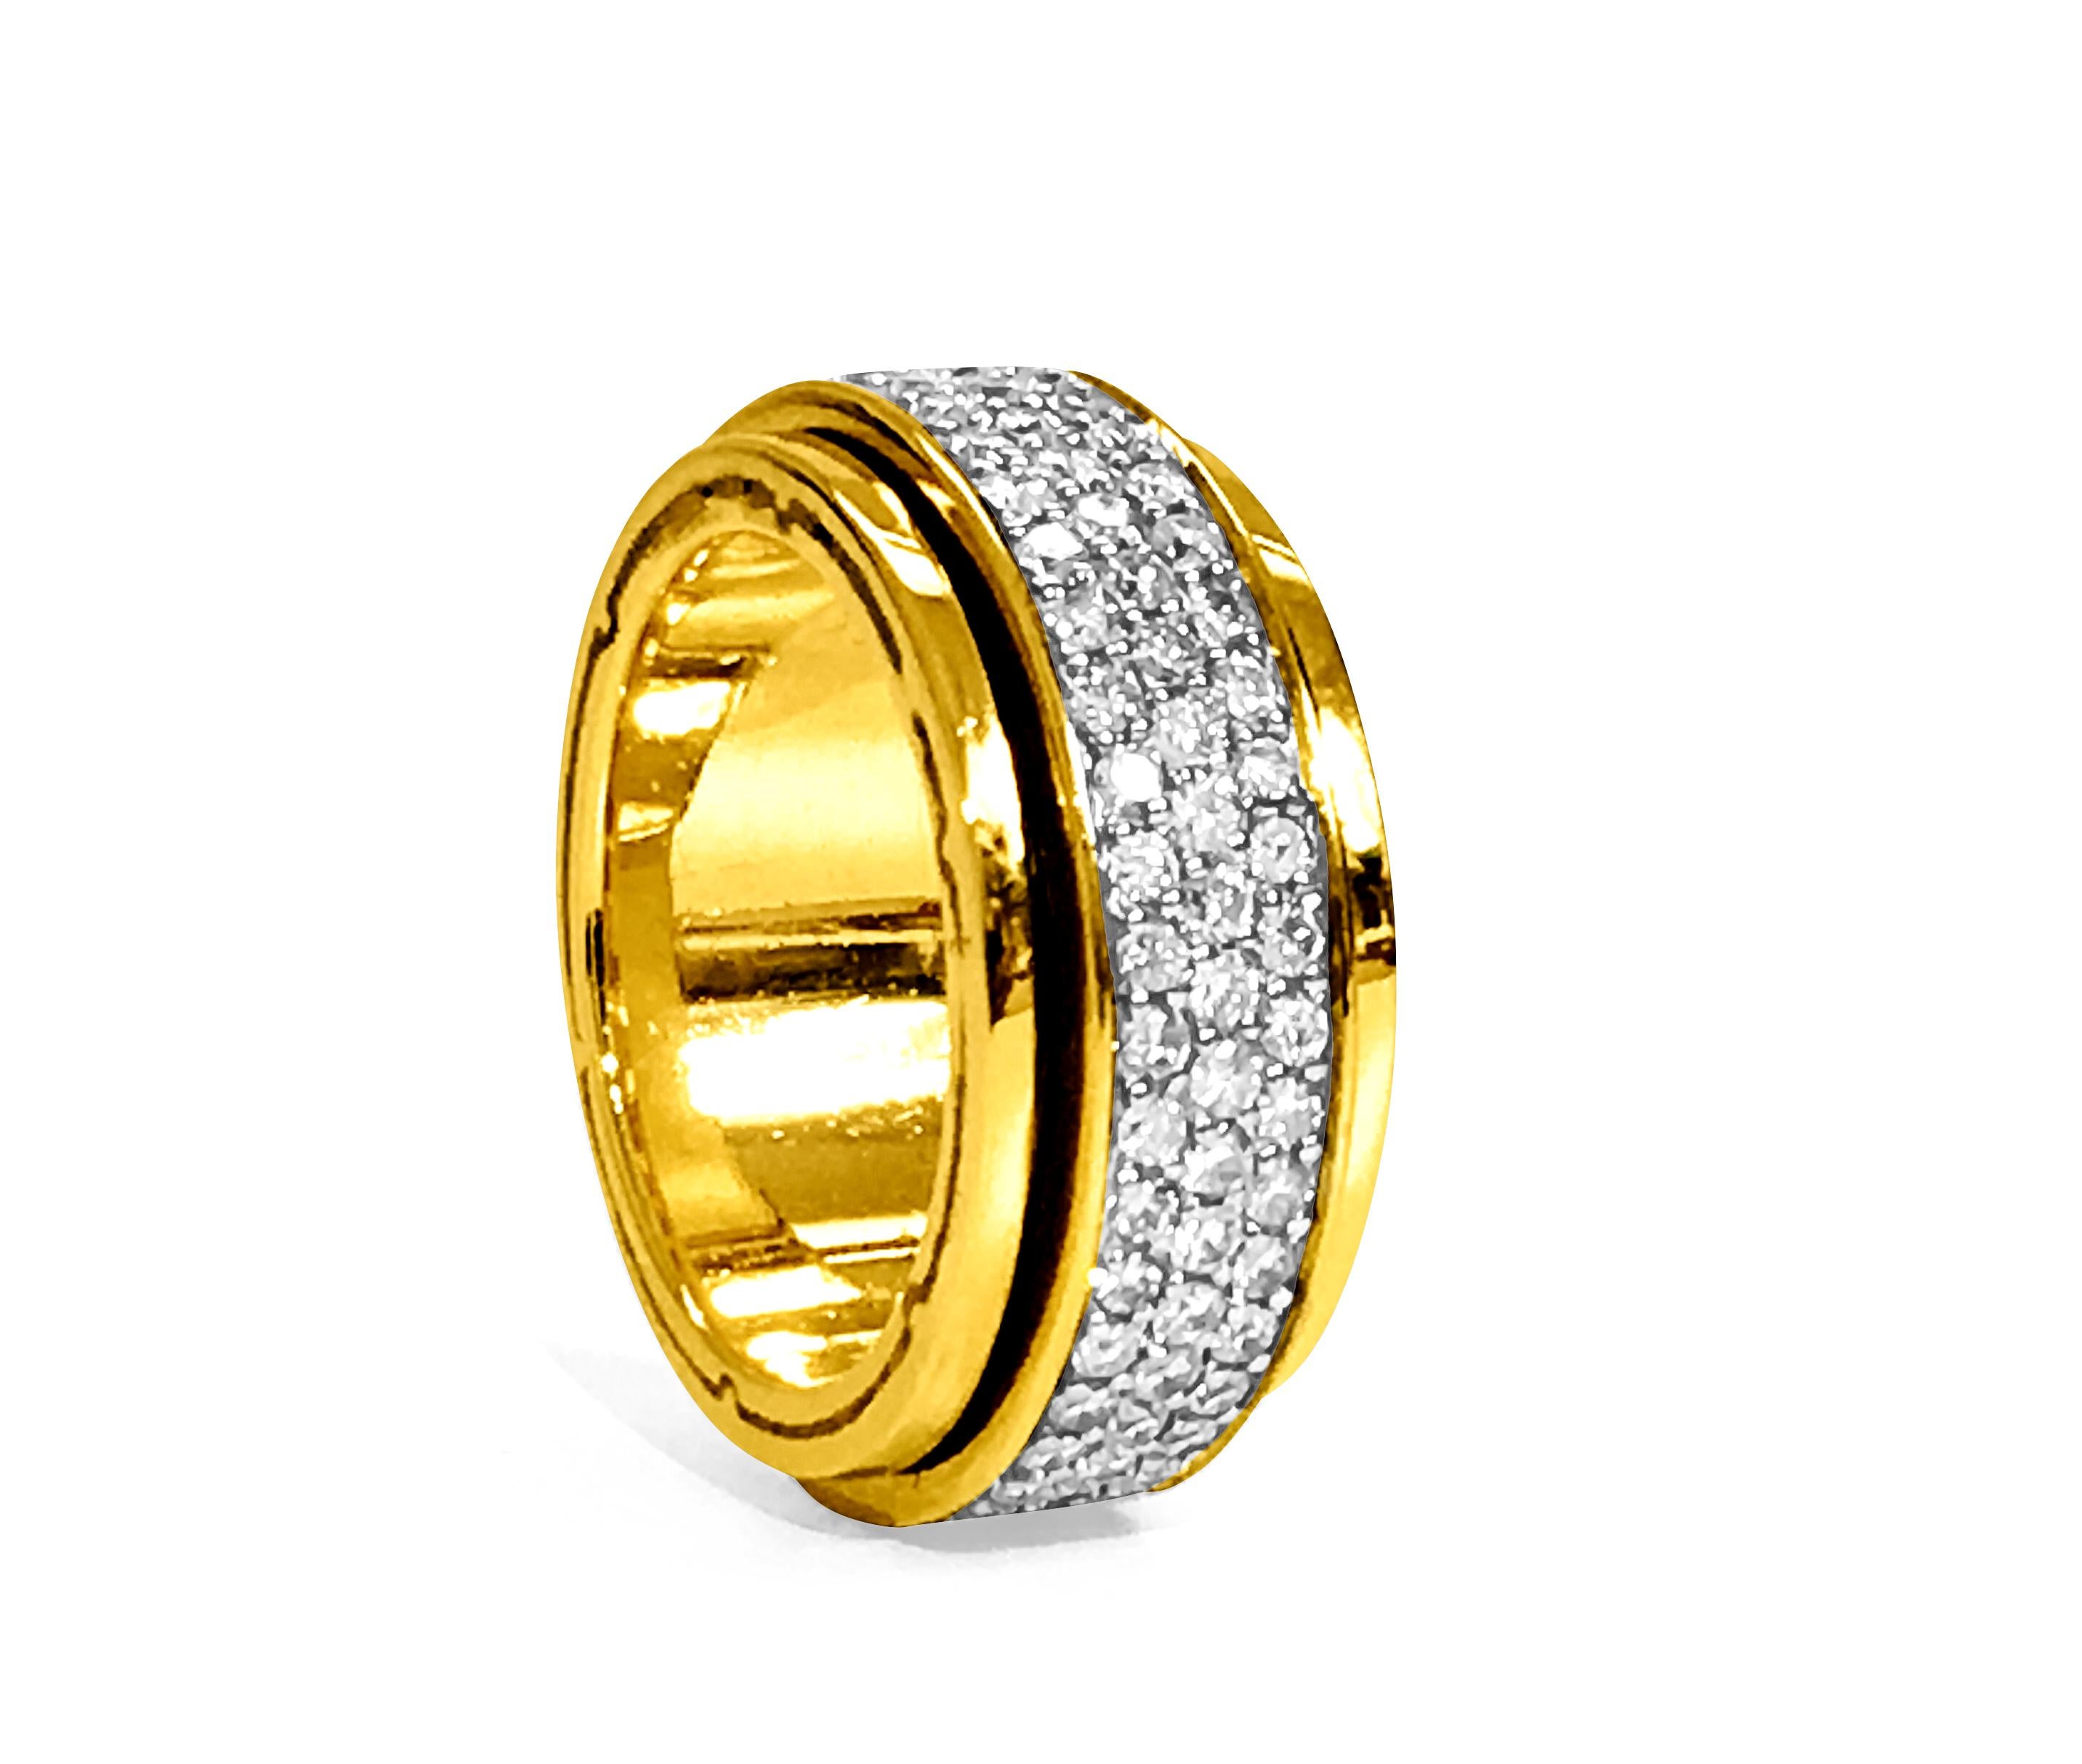 Brilliant Cut 18k Yellow Gold, 4.50 Carat VVS Diamond Ring For Sale